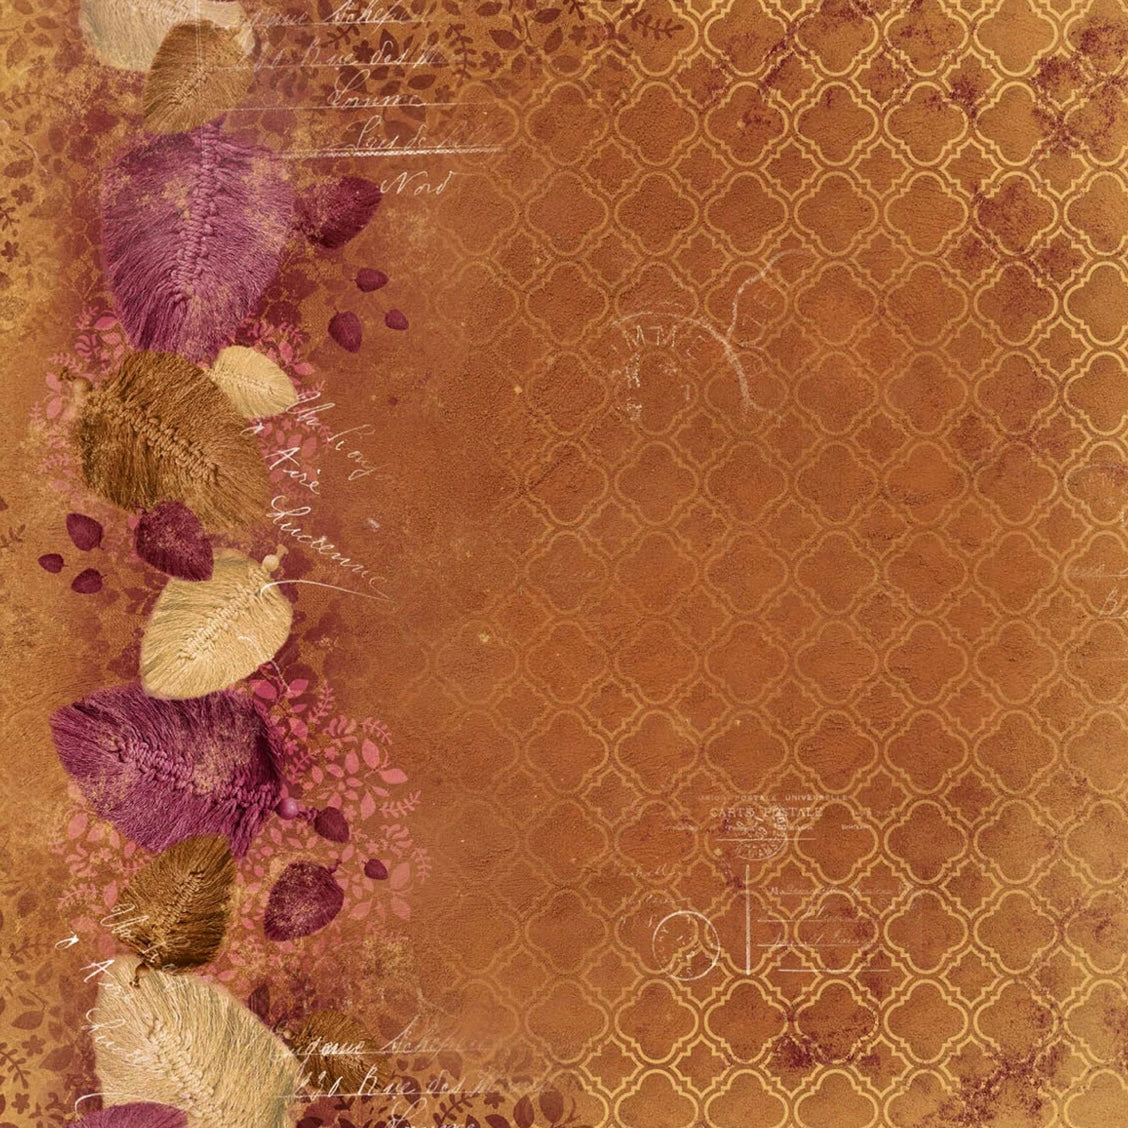 Decorative Warm & Cozy Paper Pad 8x8 Inch - Jenines Mindful Art